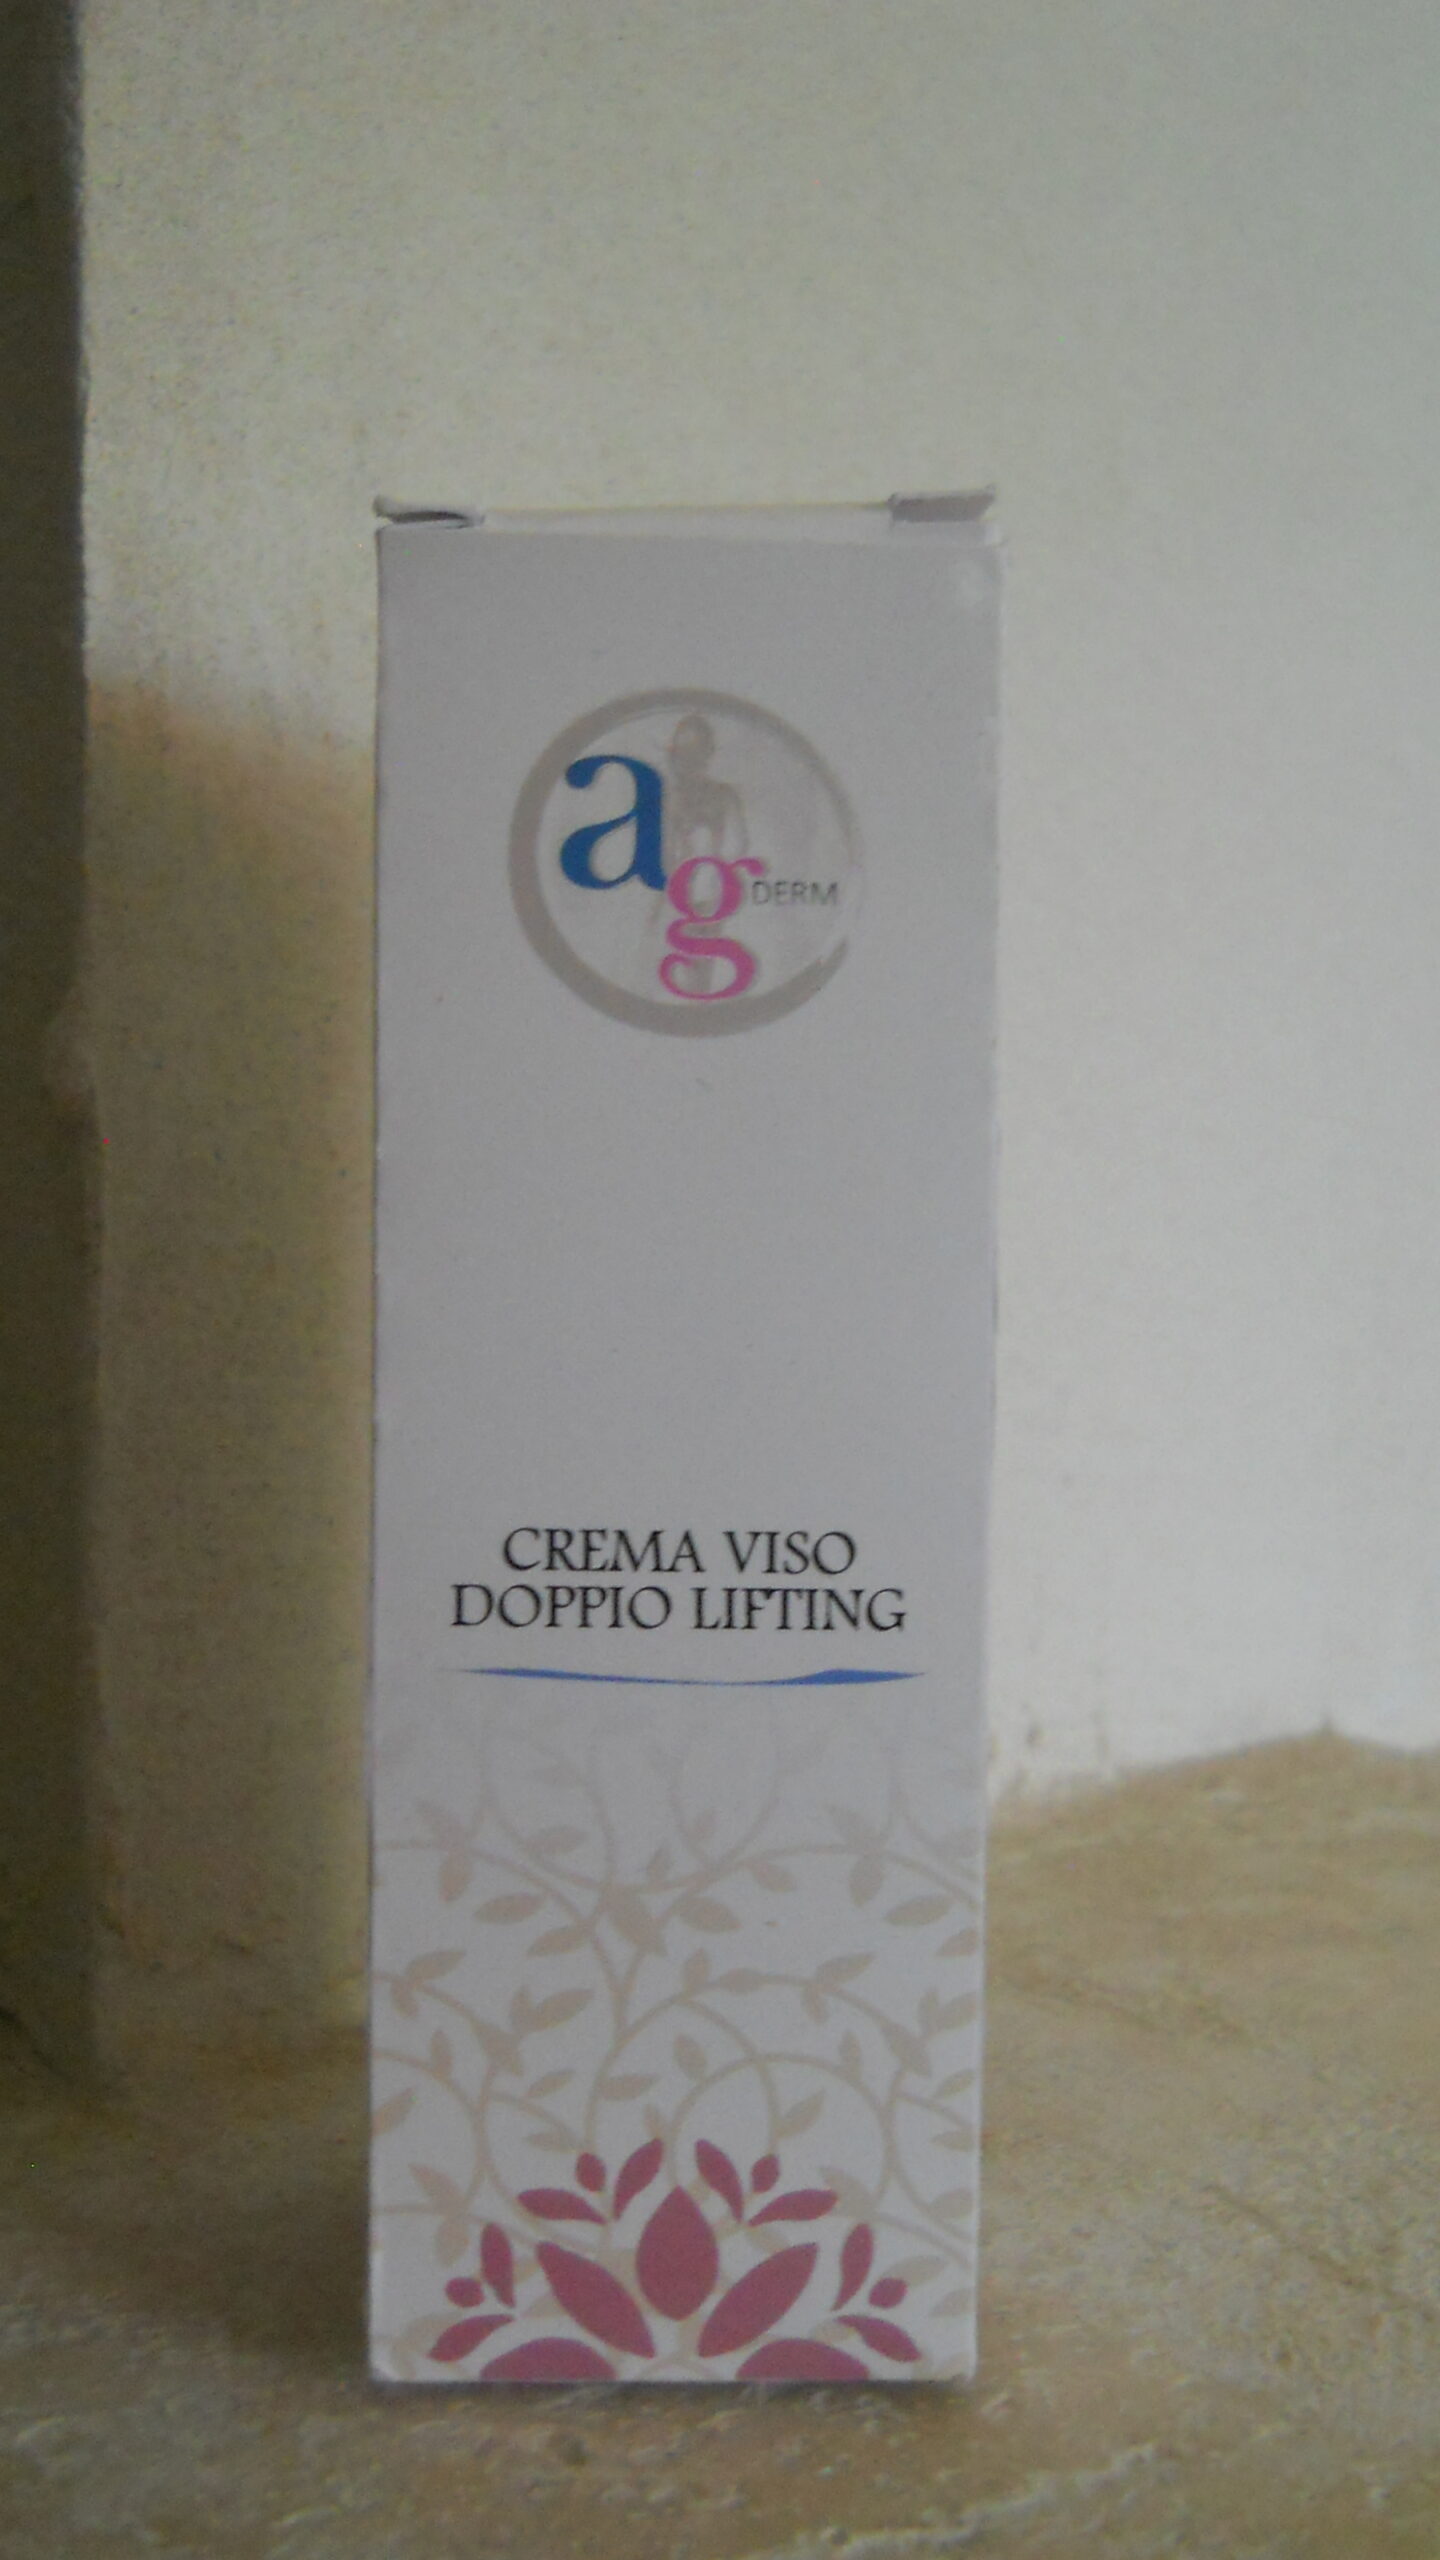 Featured image for “Crema Viso doppio Lifting Cosmetica Bio AG Derm”